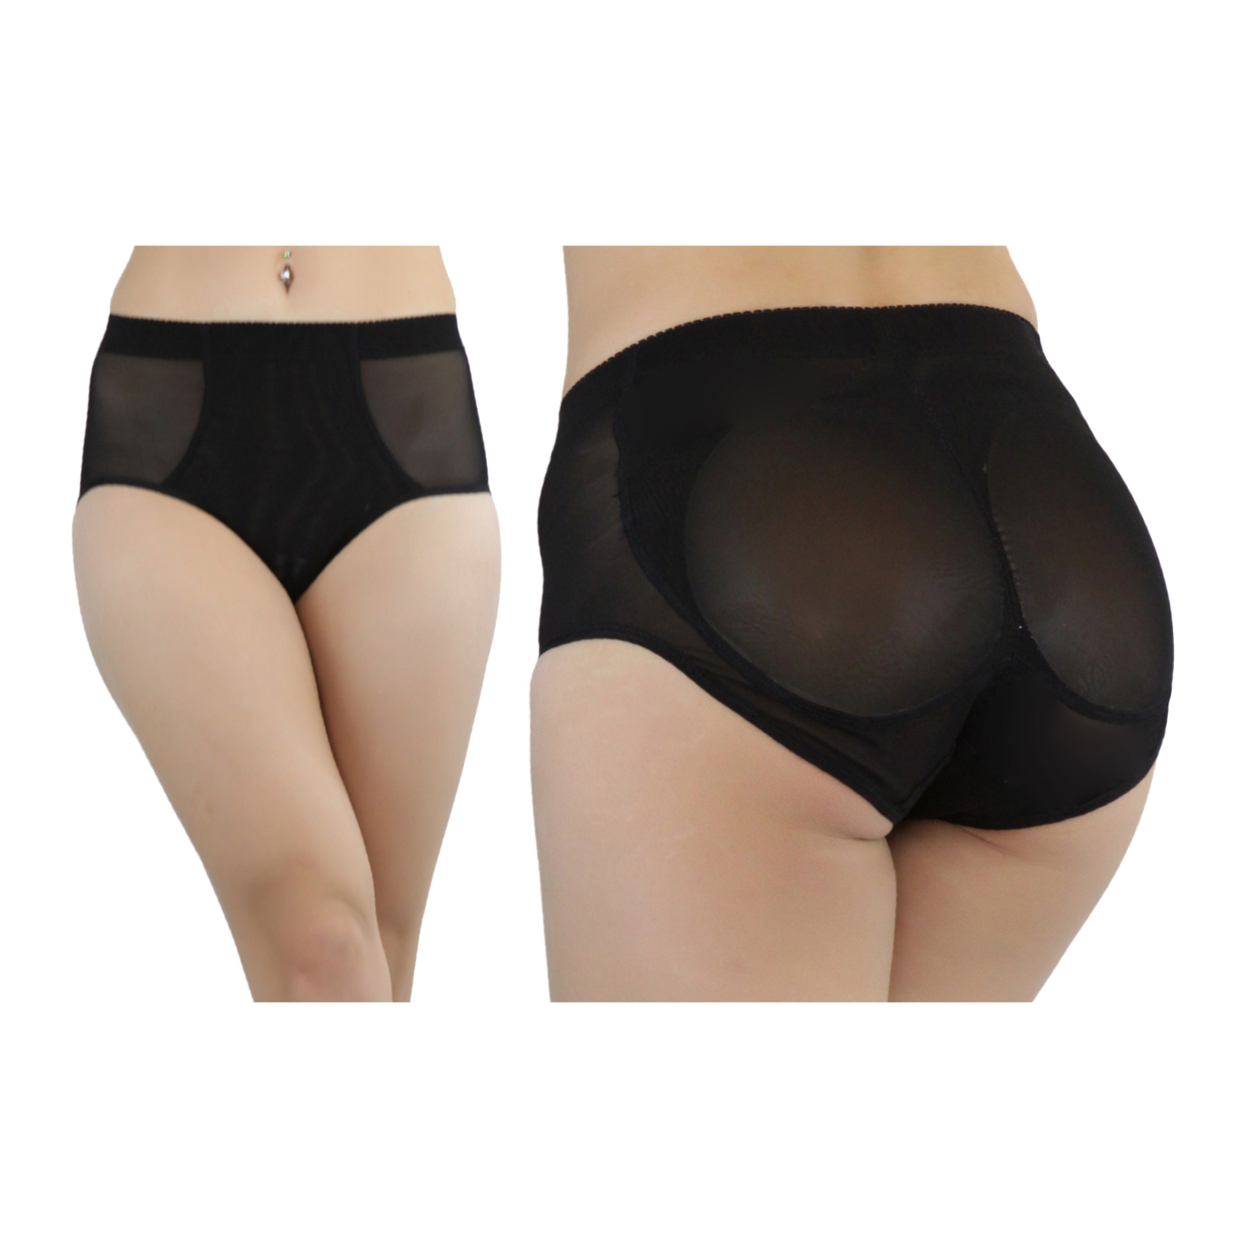 Women's Silicone Instant Buttocks Enhancer Panties - Black, M